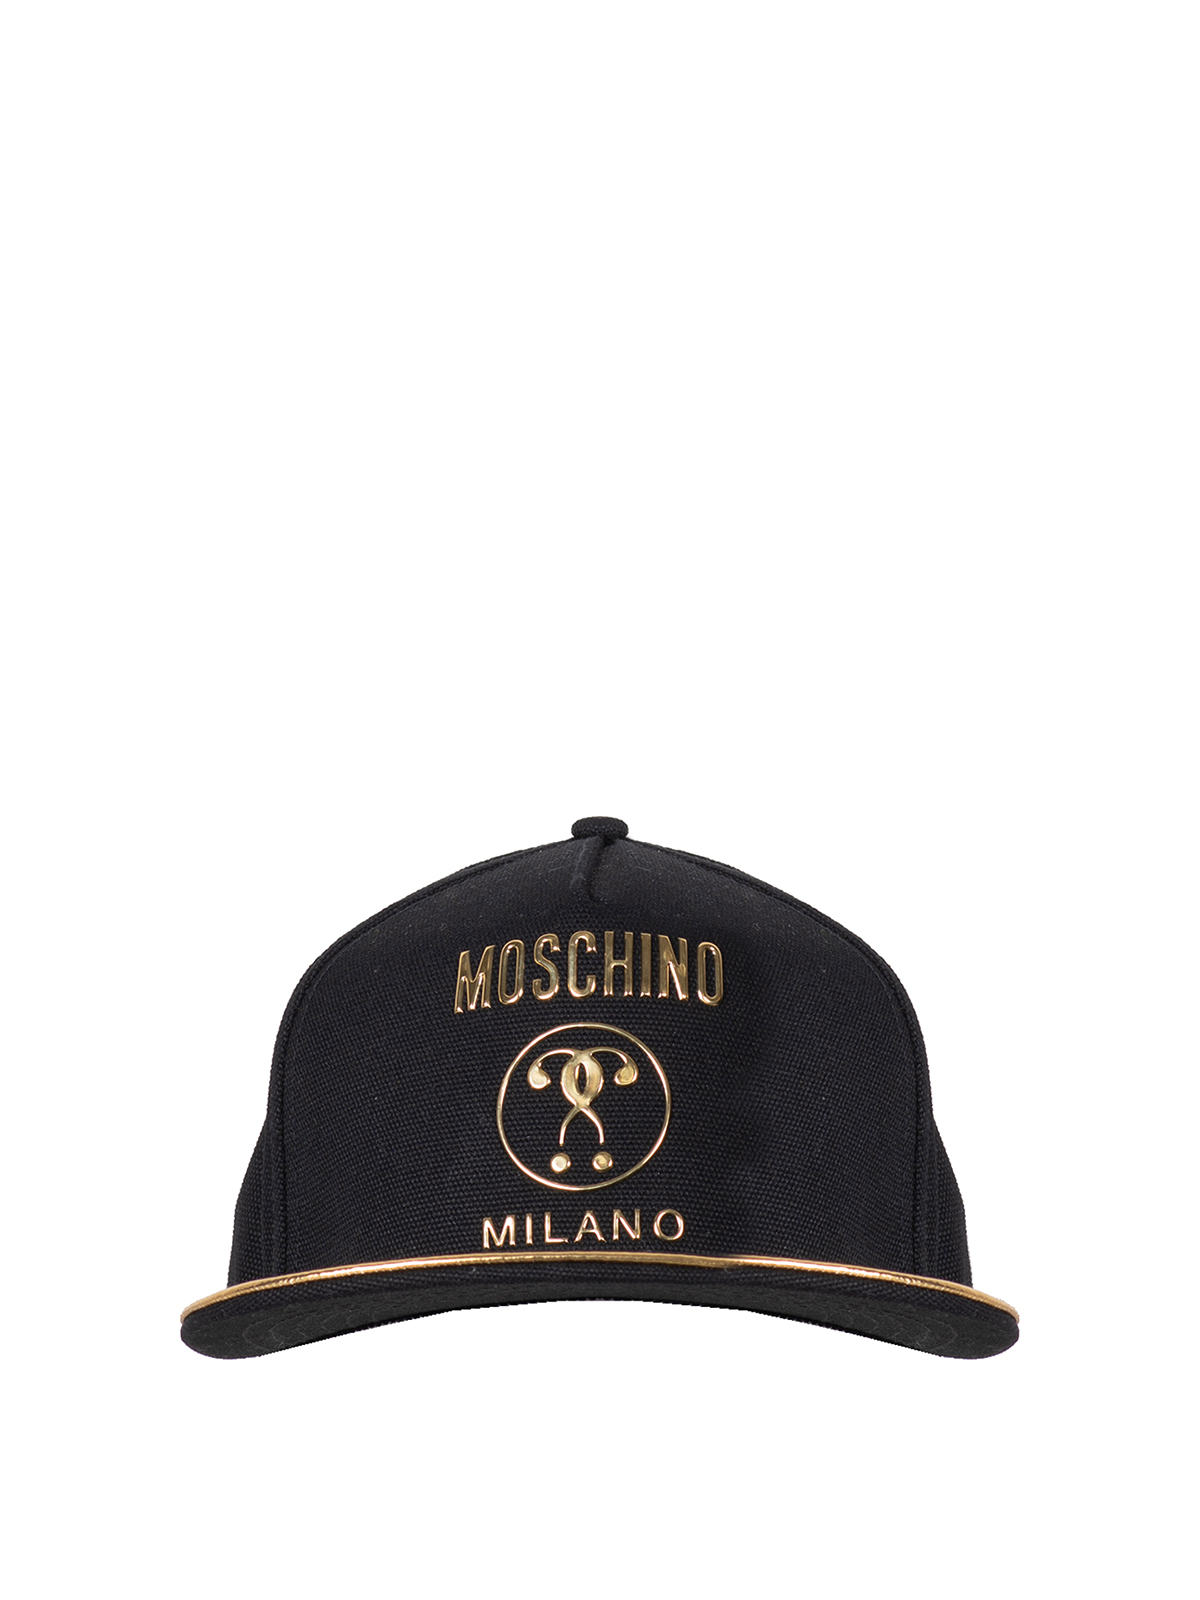 Moschino Dqm Cap Gold In Black